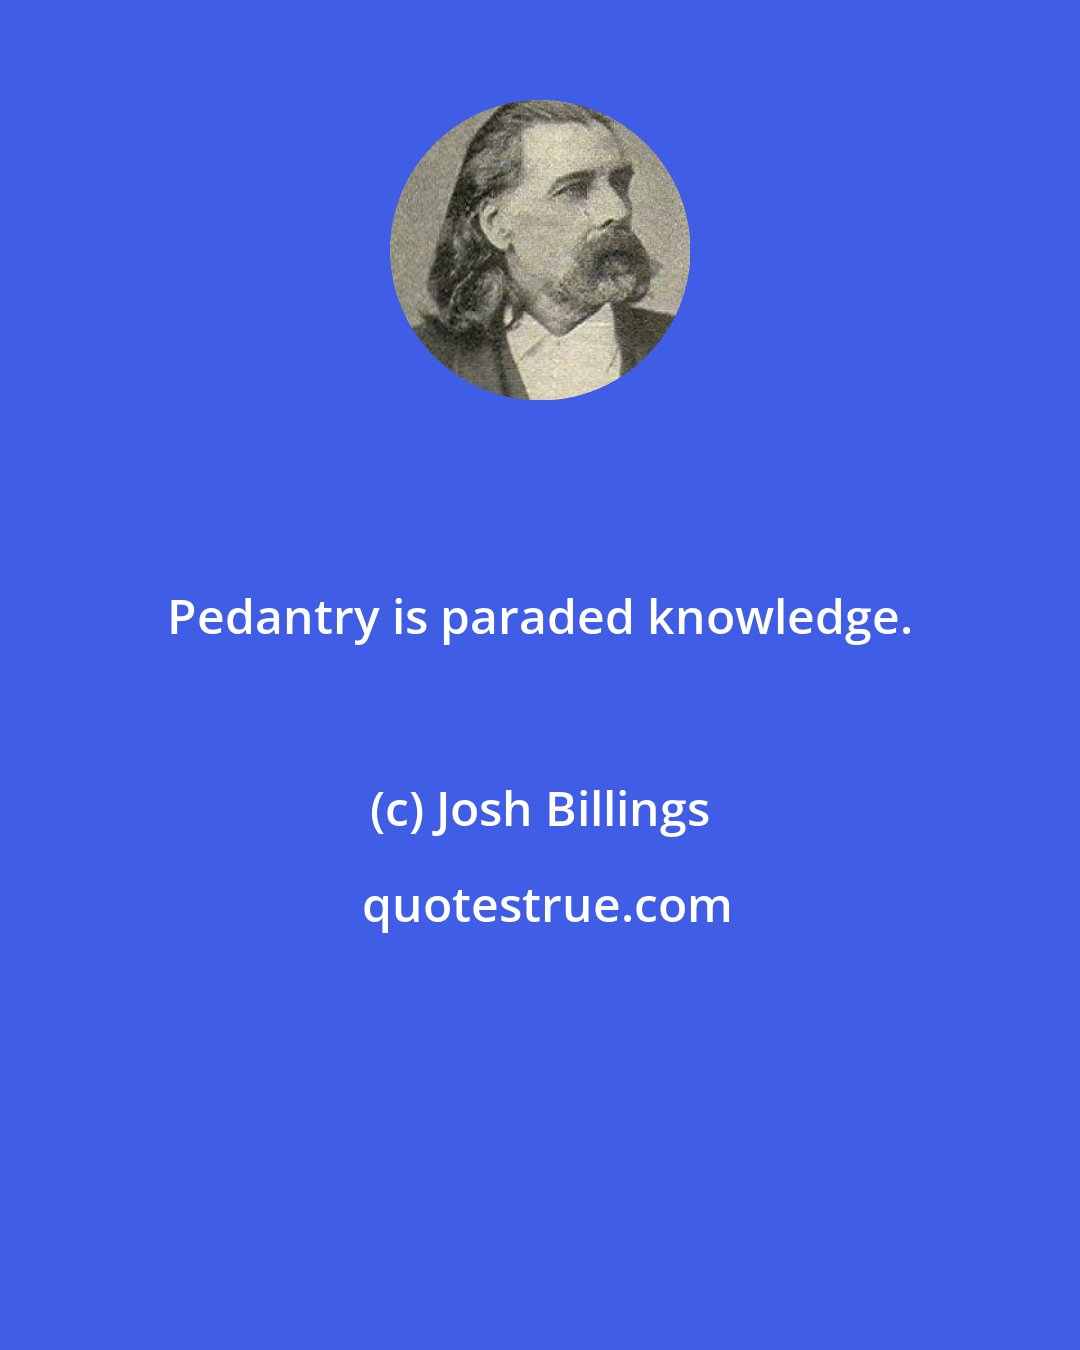 Josh Billings: Pedantry is paraded knowledge.